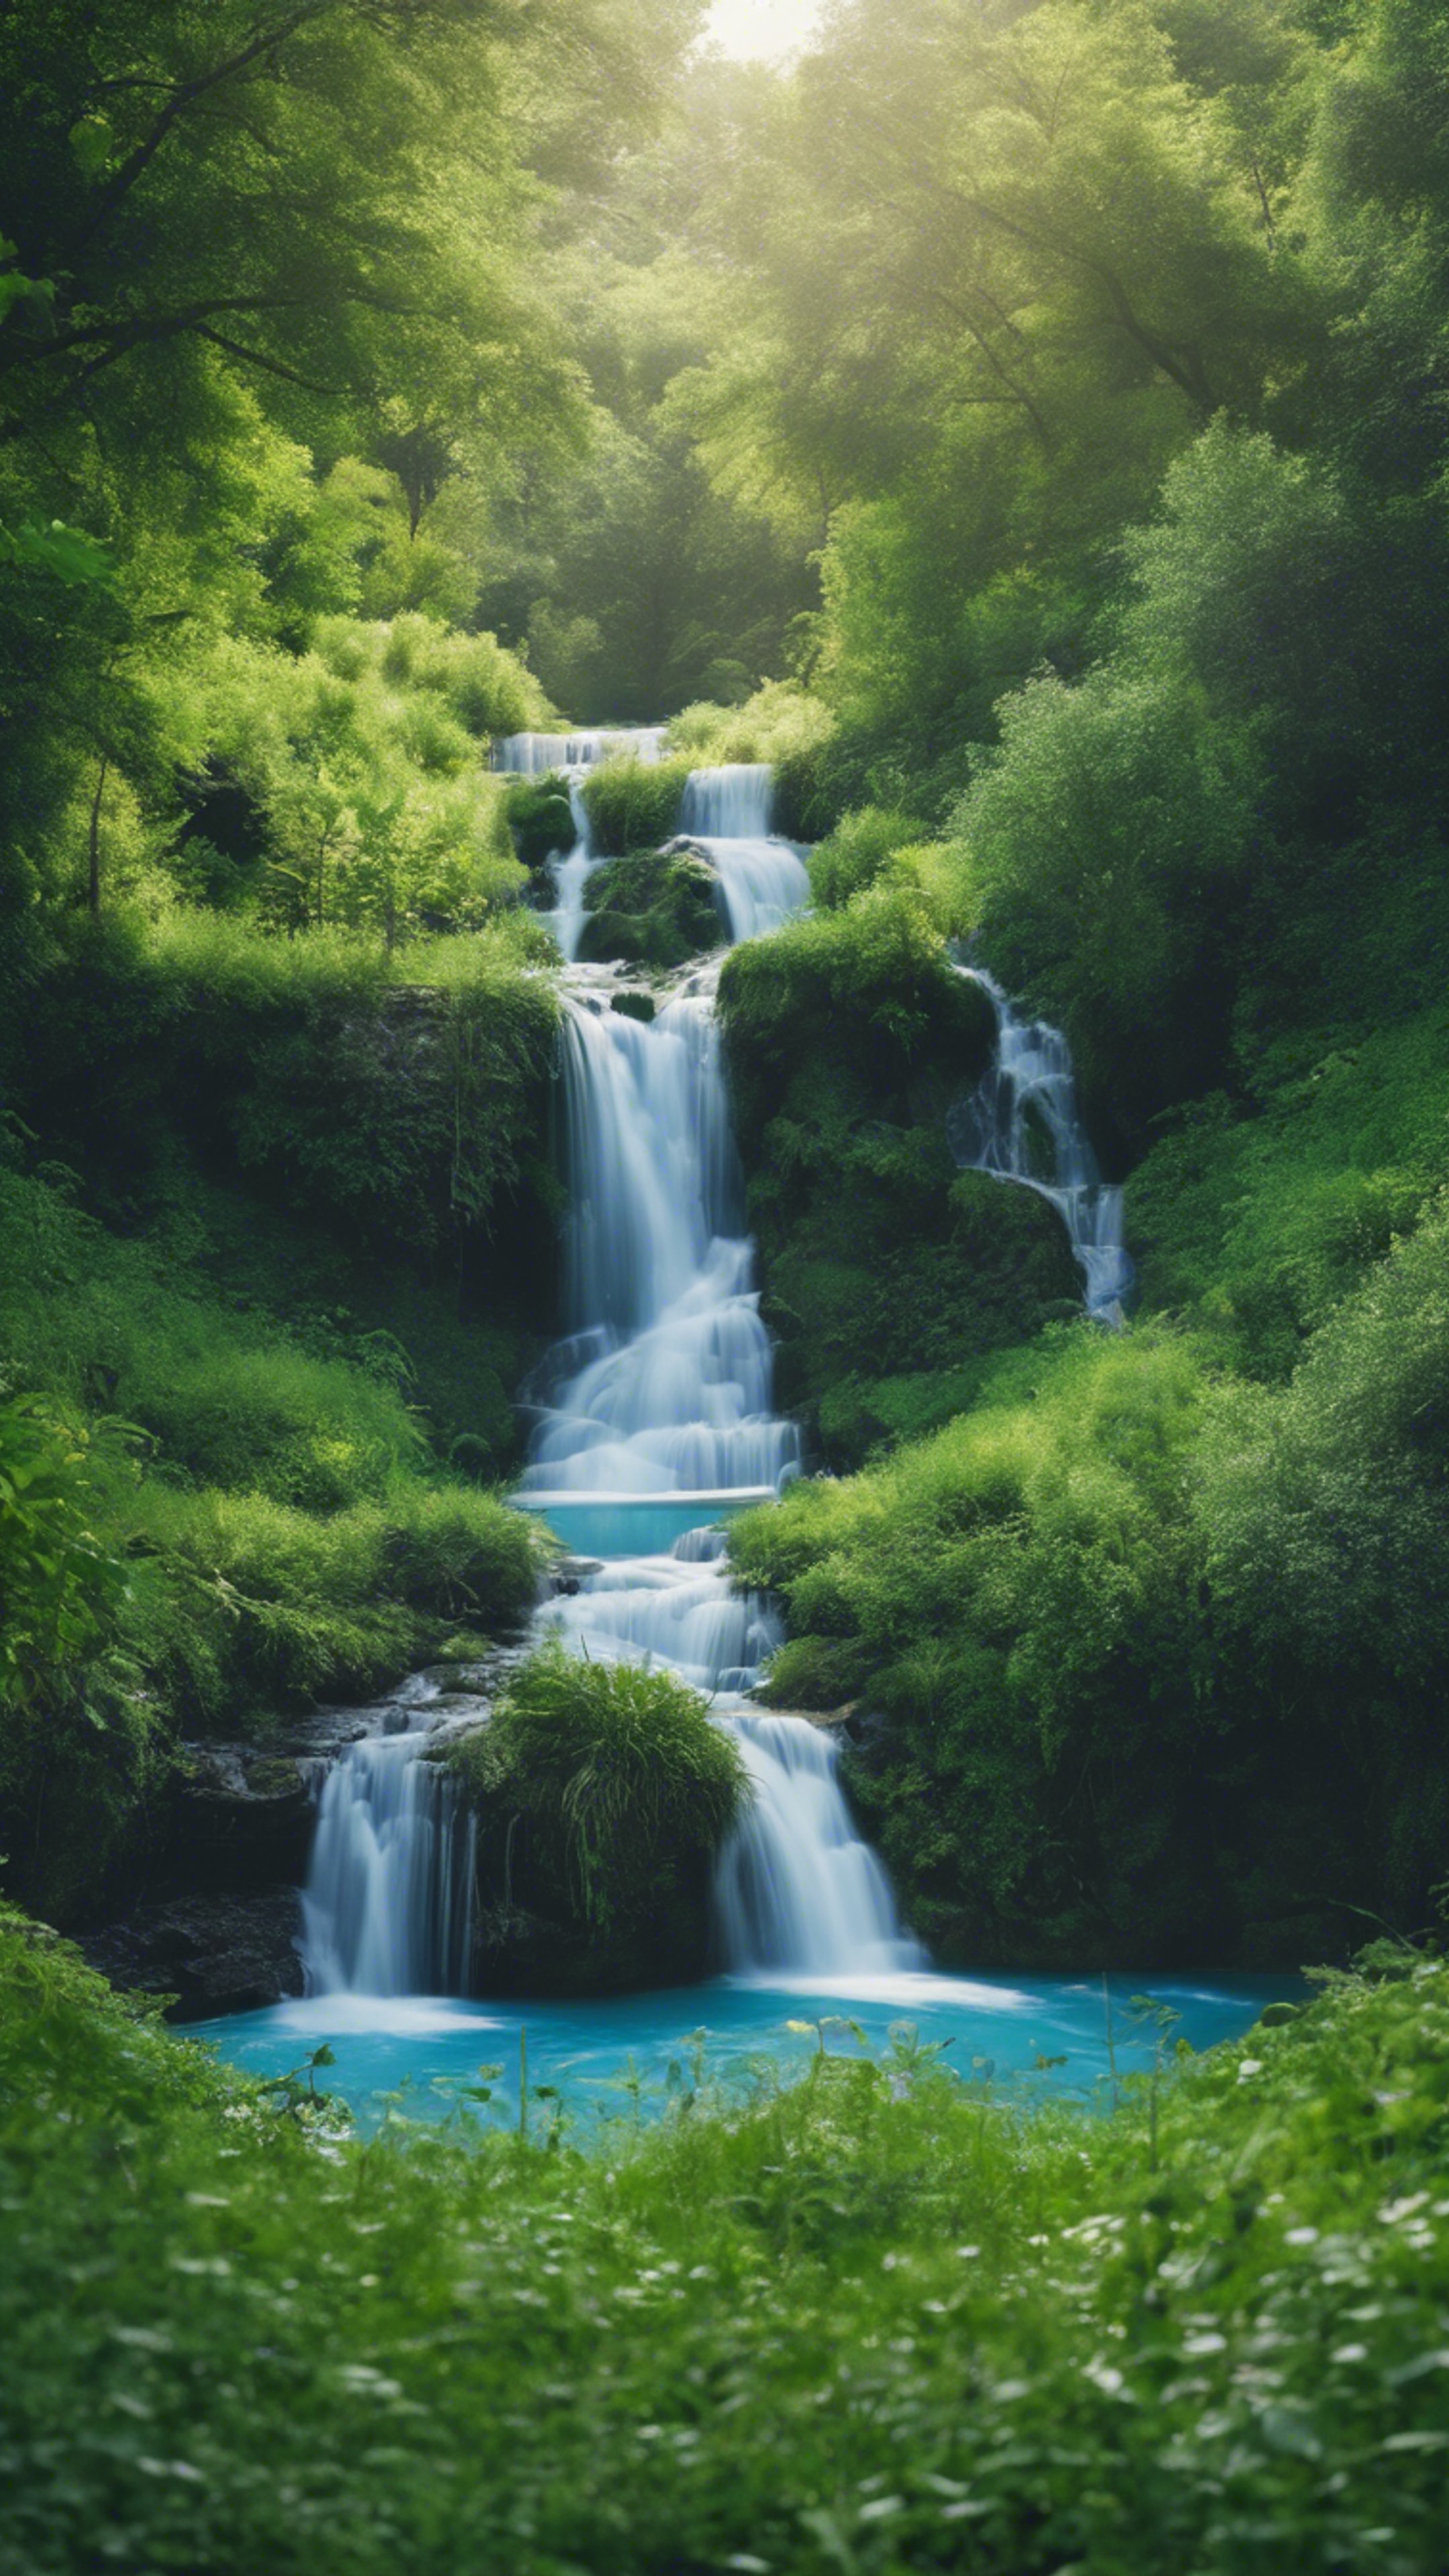 A cool blue waterfall cascading into a lush green meadow.壁紙[661f80b9c31c460db5eb]